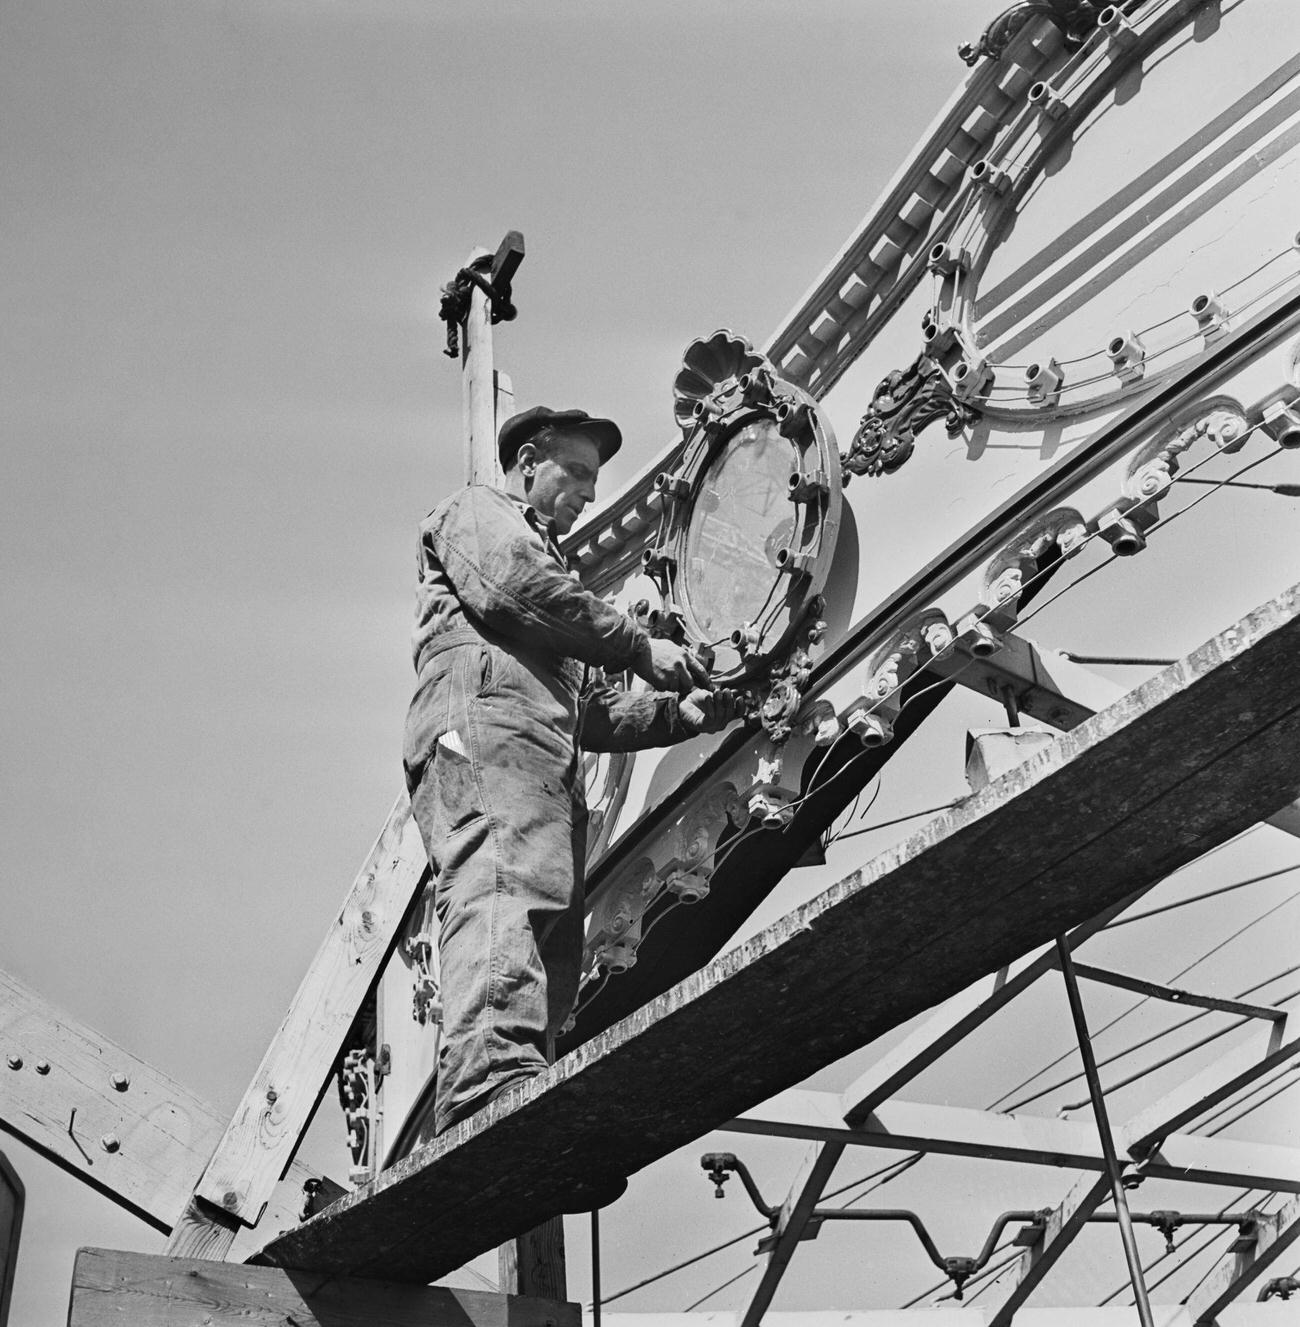 Labourer Repairing Funfair Lighting At Coney Island, 1950